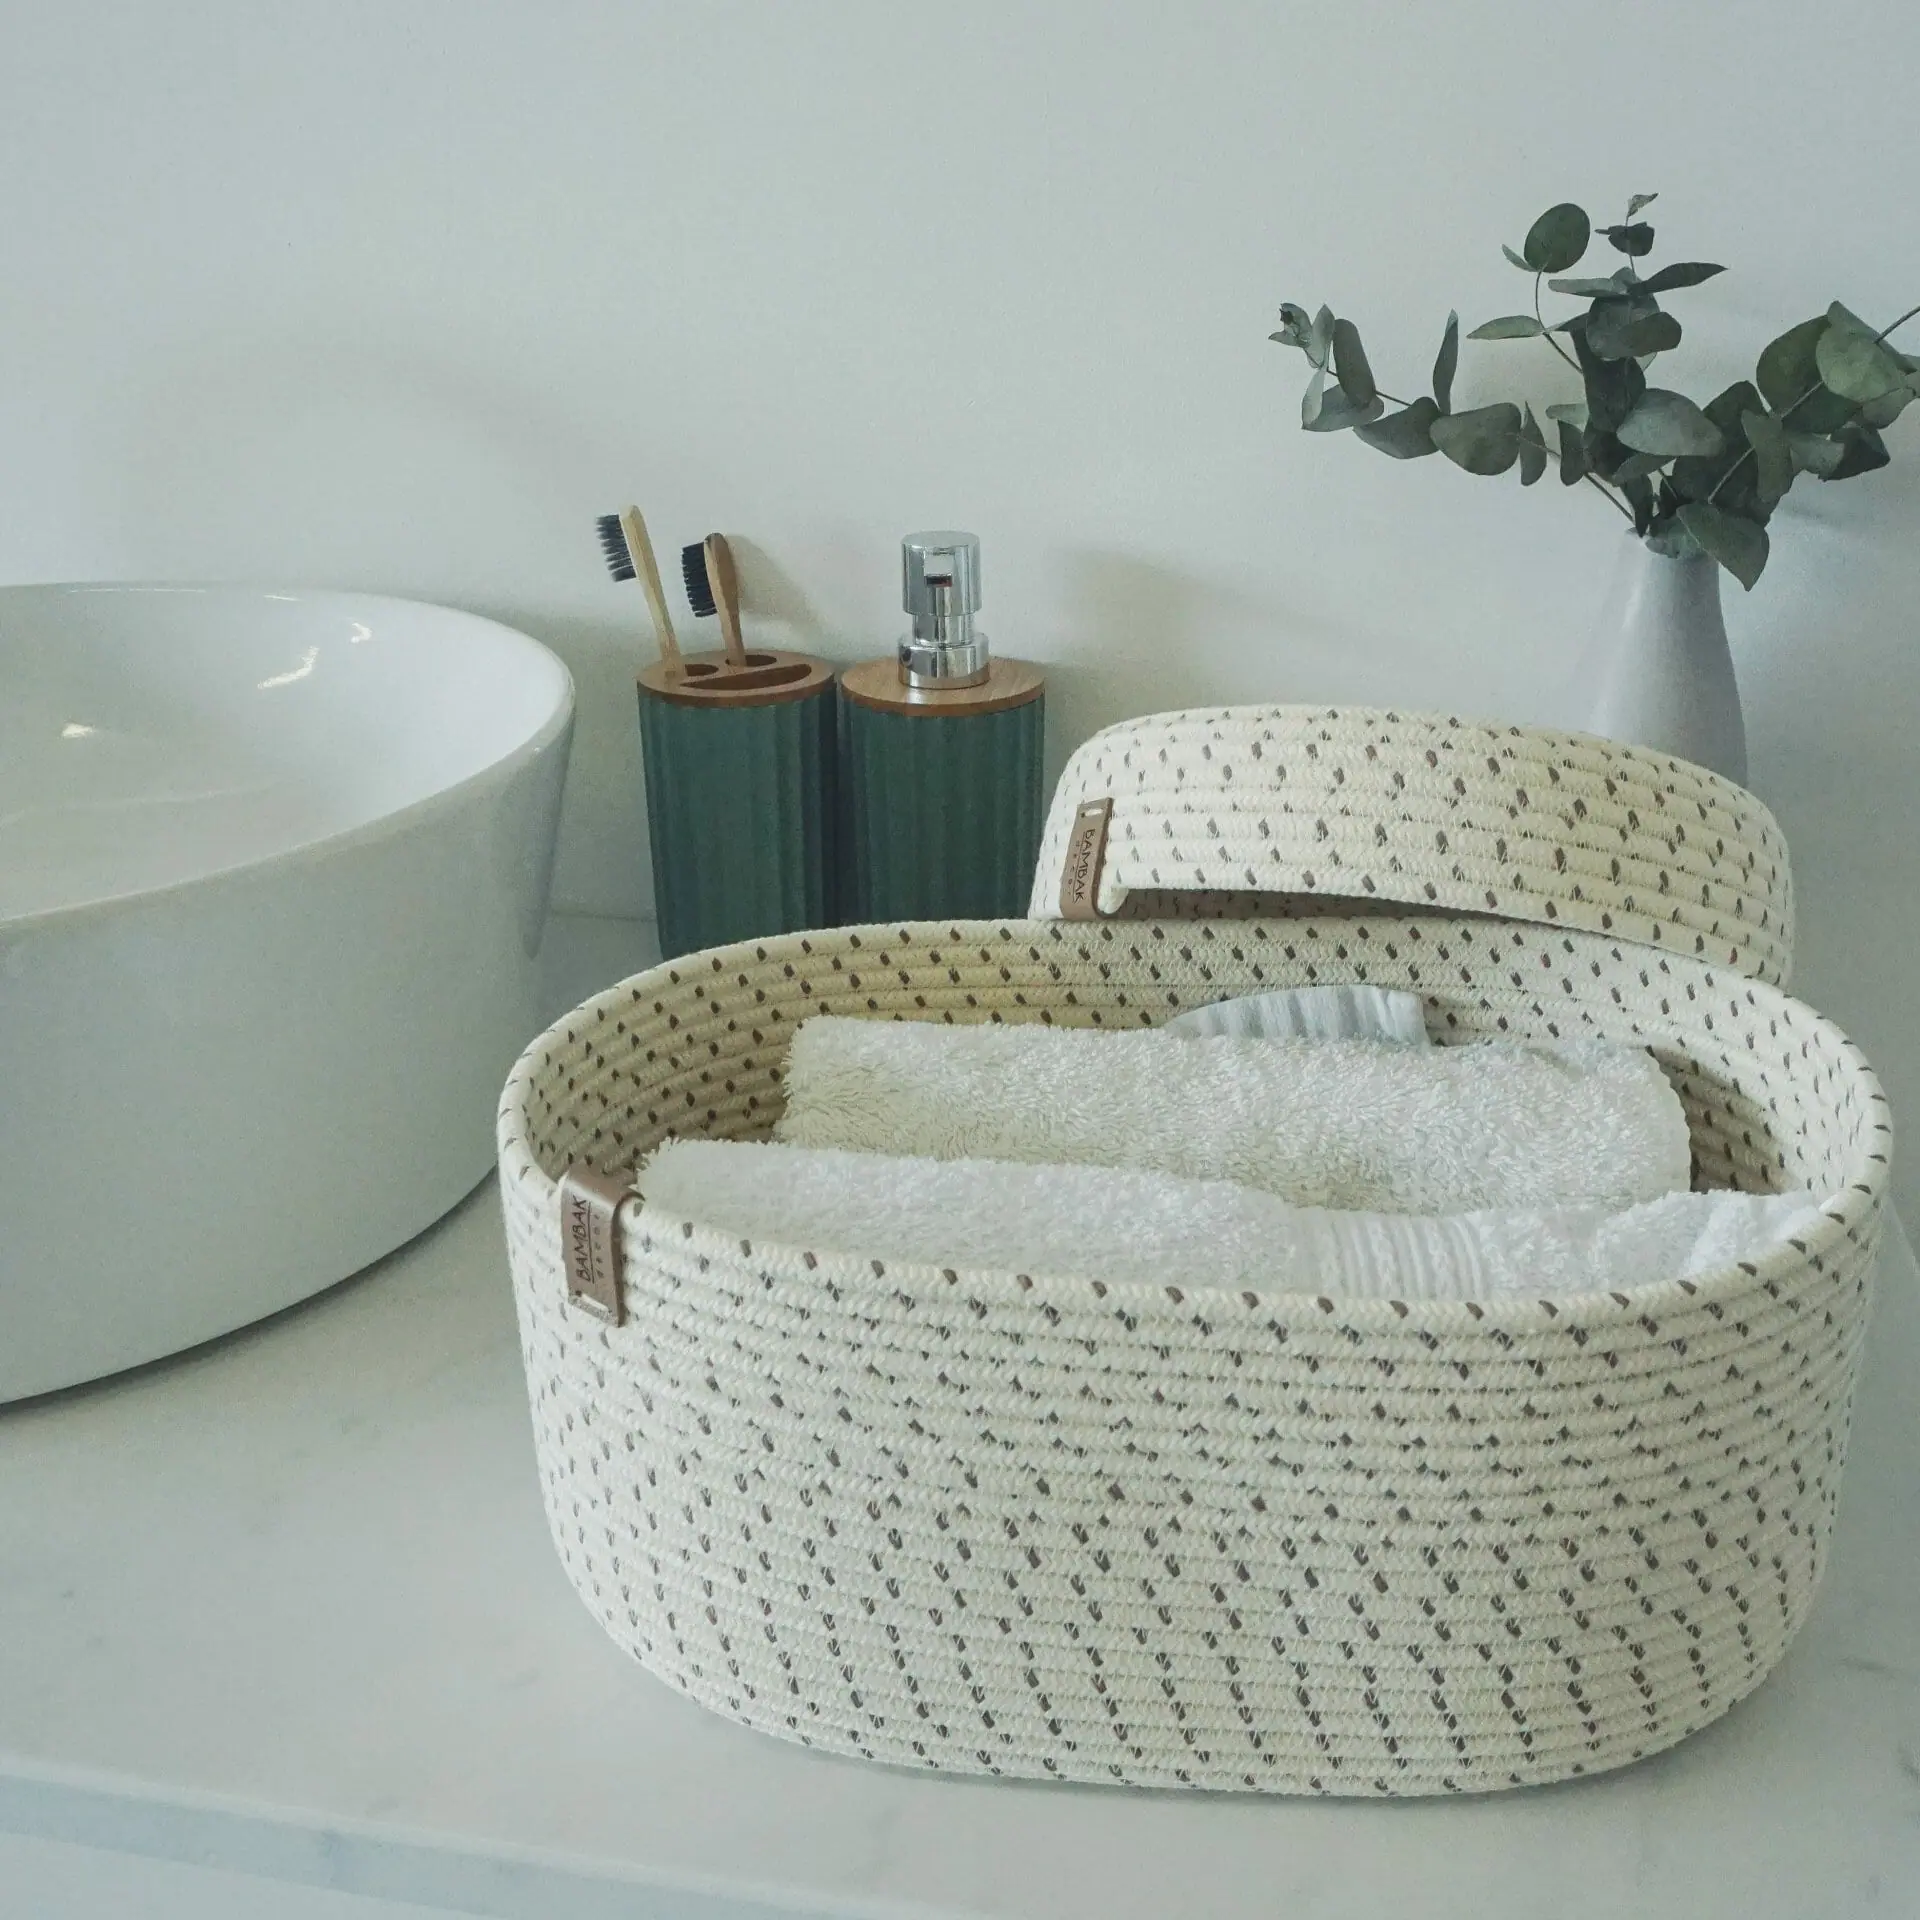 oval white rope basket with lid in bathroom.jpg